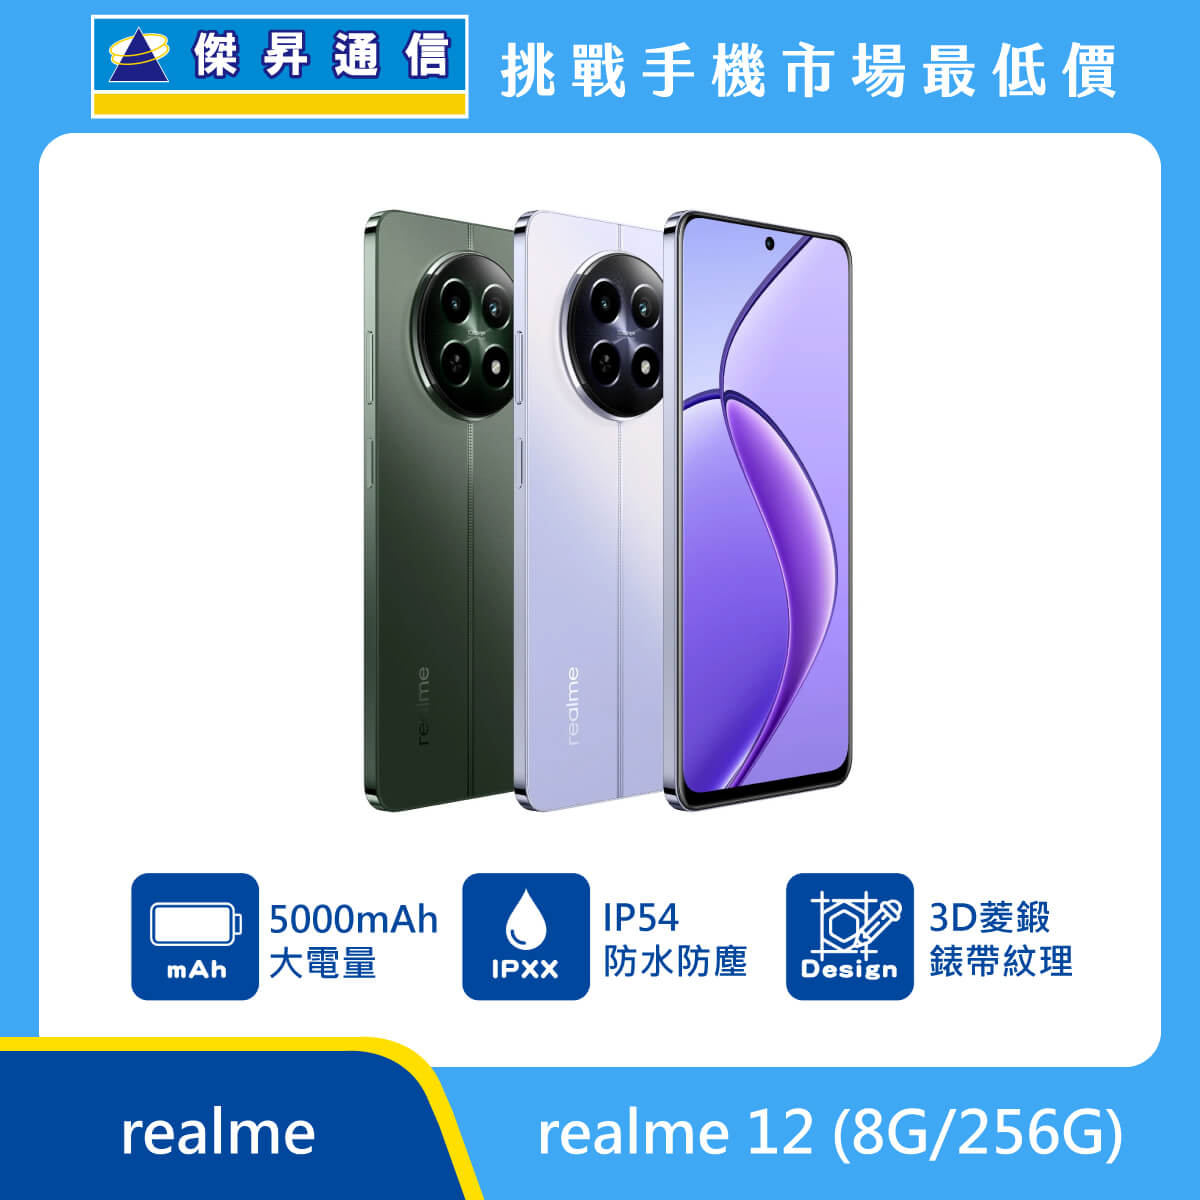 realme 12 (8G/256G)